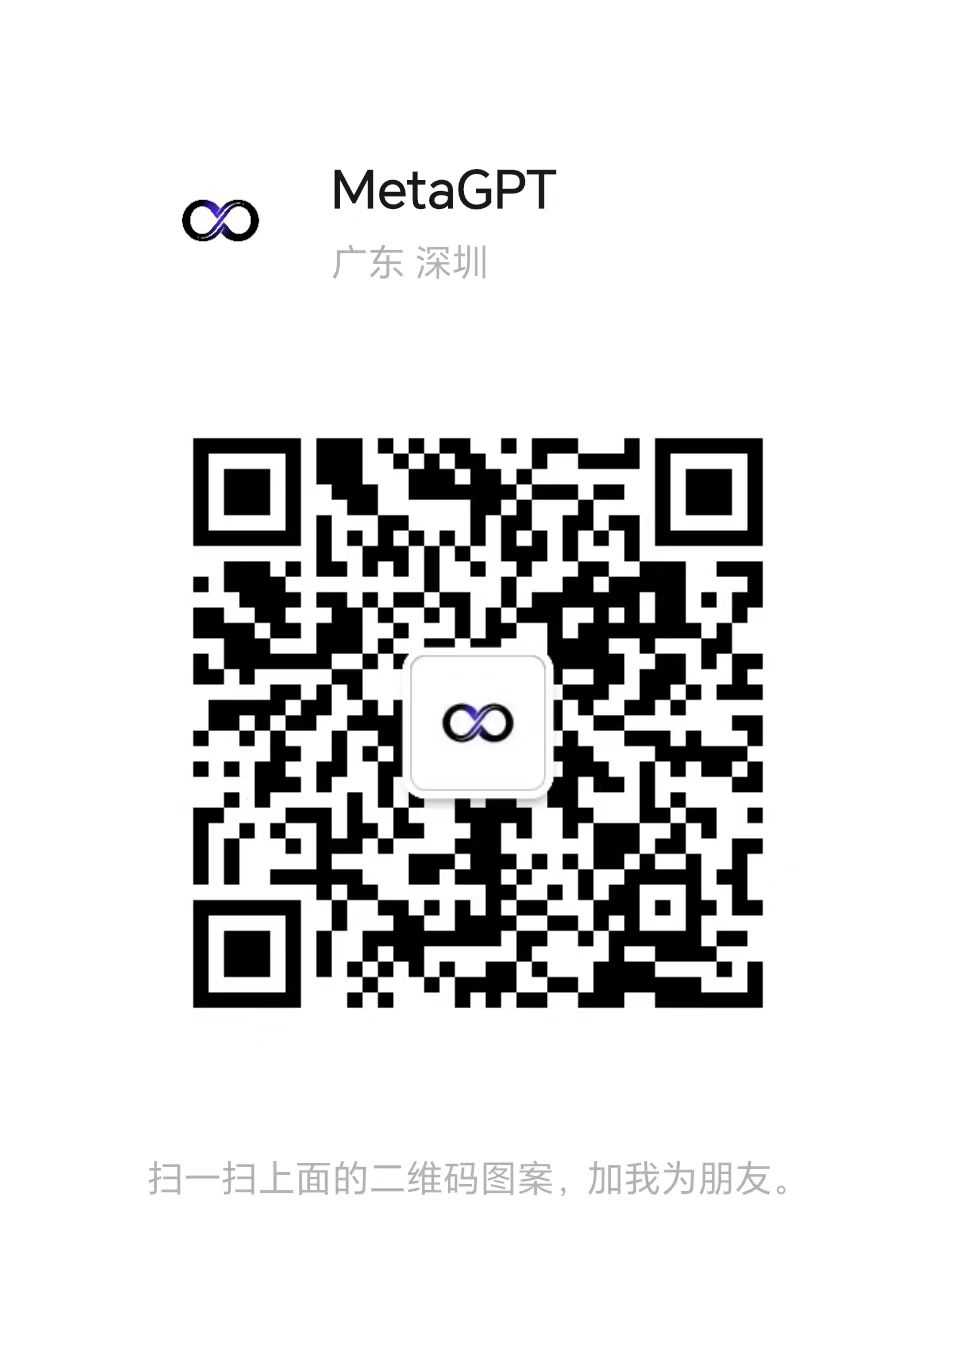 MetaGPT-WeChat-Personal.jpeg